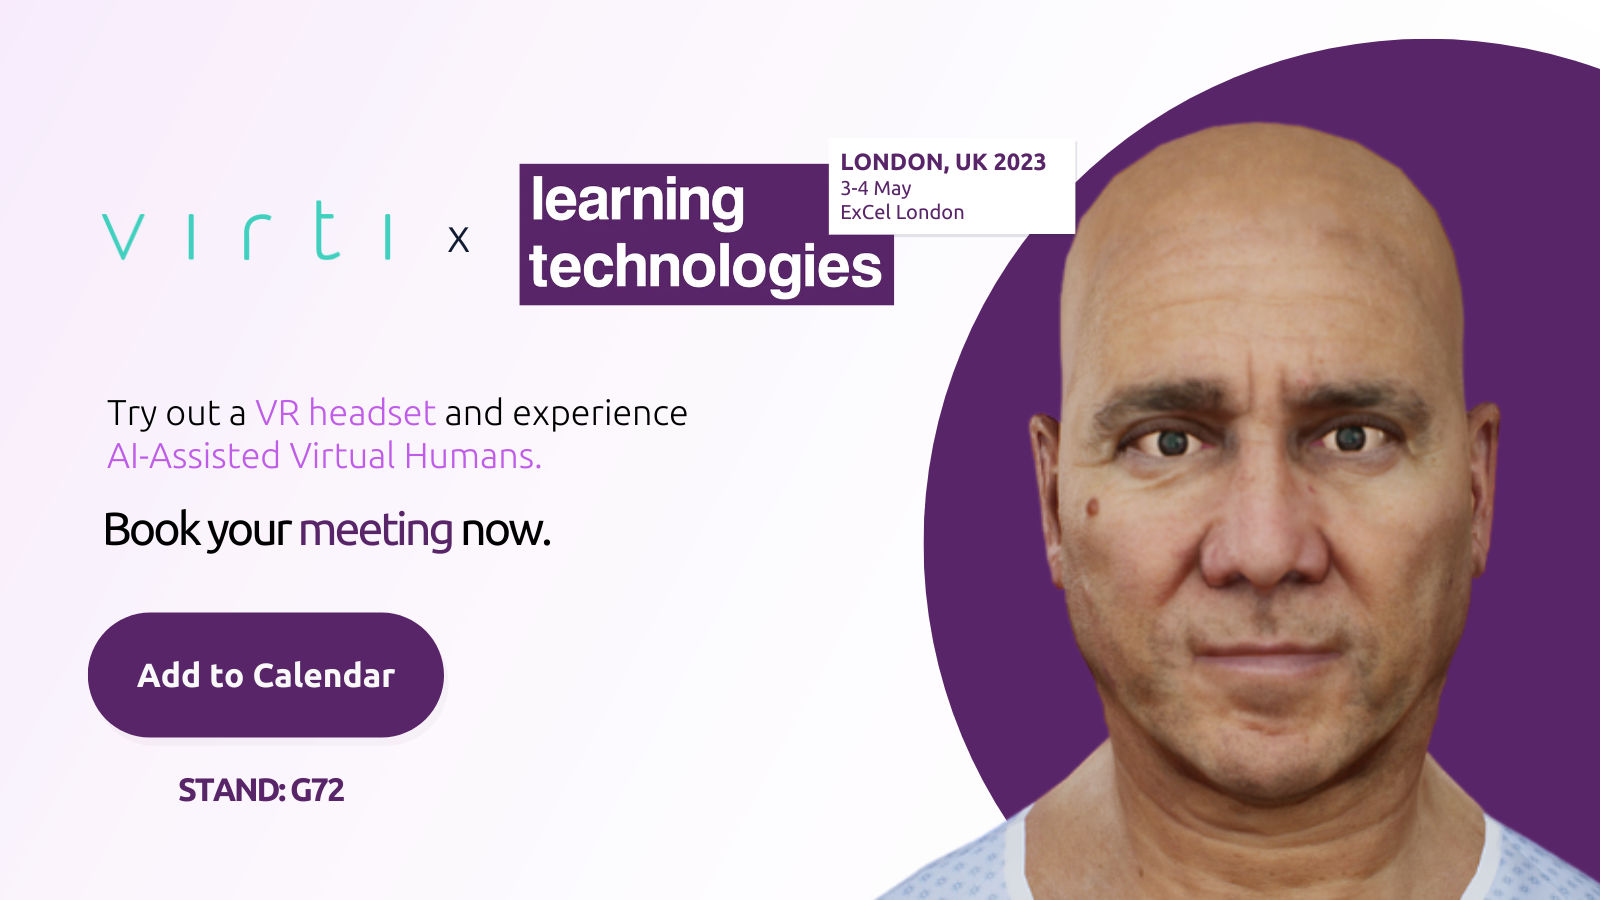 Virti x Learning Technologies 2023